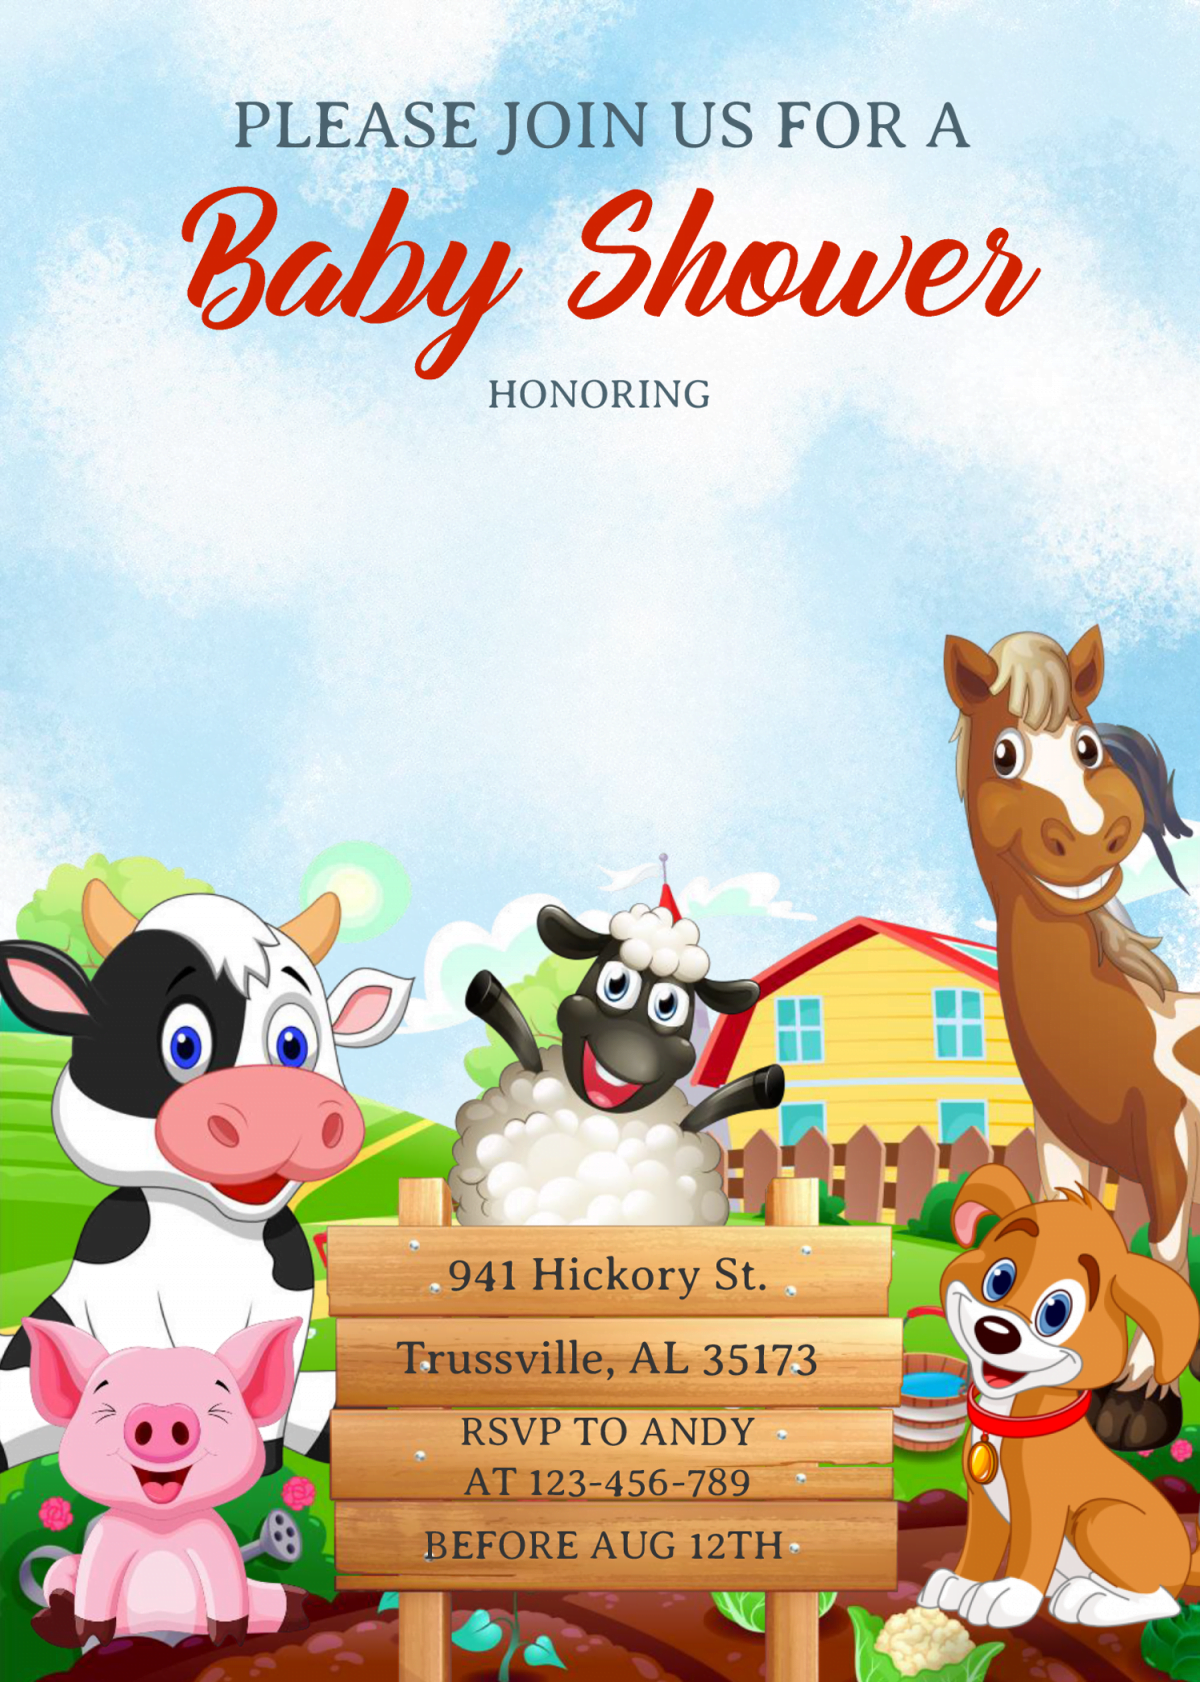 Farm Animals Invitation Templates - Editable With Microsoft Word and has shaun the sheep graphics